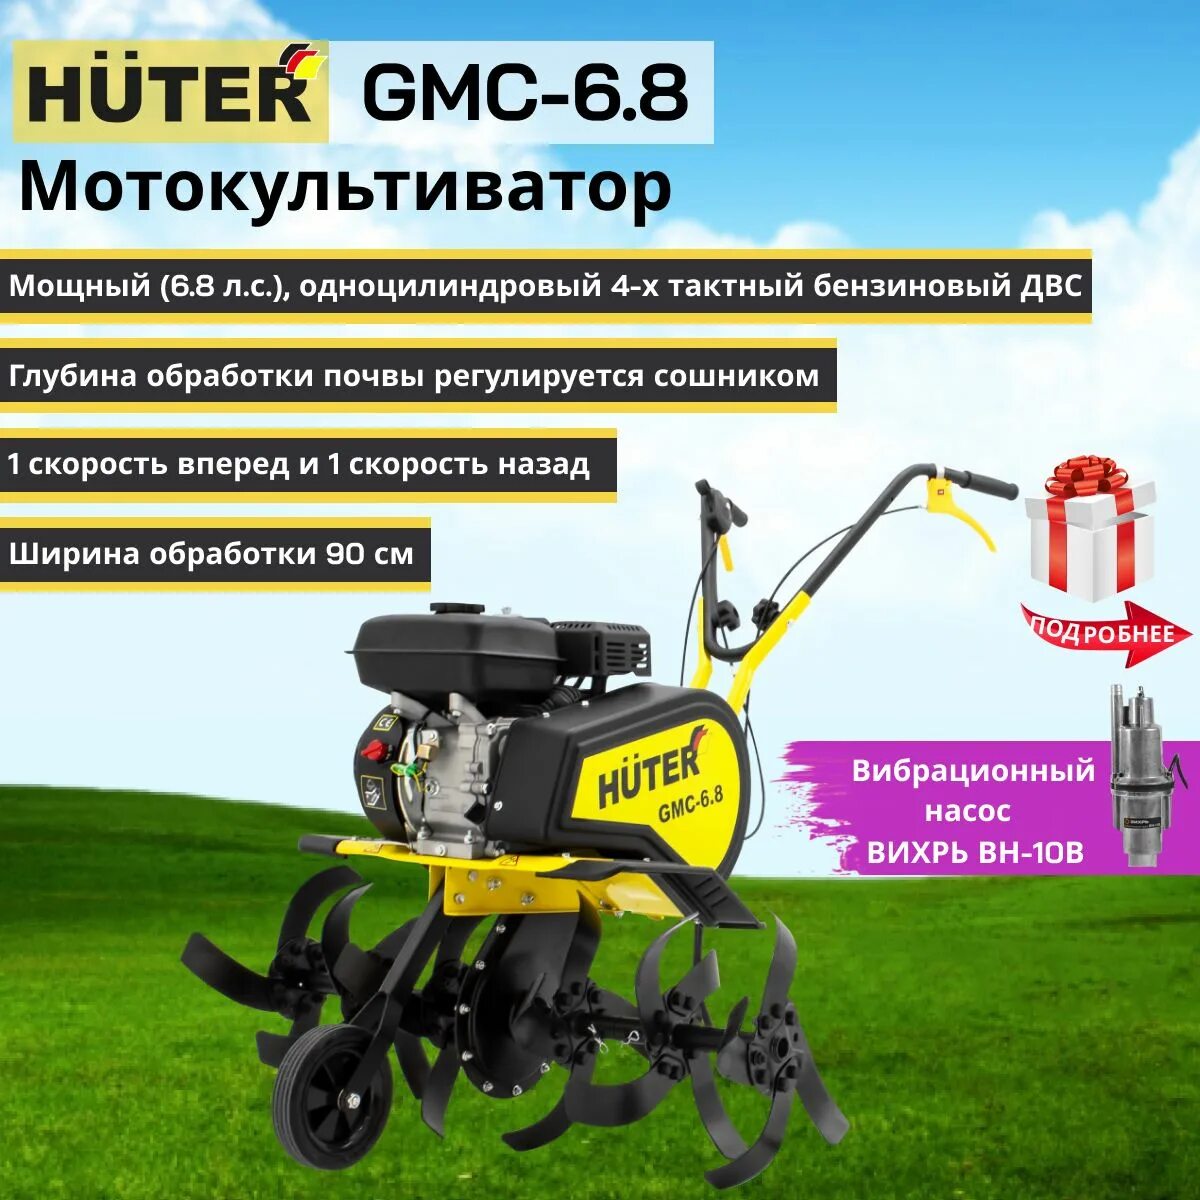 Купить мотоблок huter. Мотокультиватор GMC-6.5 Huter 70/5/6. Мотокультиватор Huter GMC-6.8 70/5/21. Мотокультиватор GMC-6.8 Huter. Бензиновый культиватор Huter GMC-6.5.